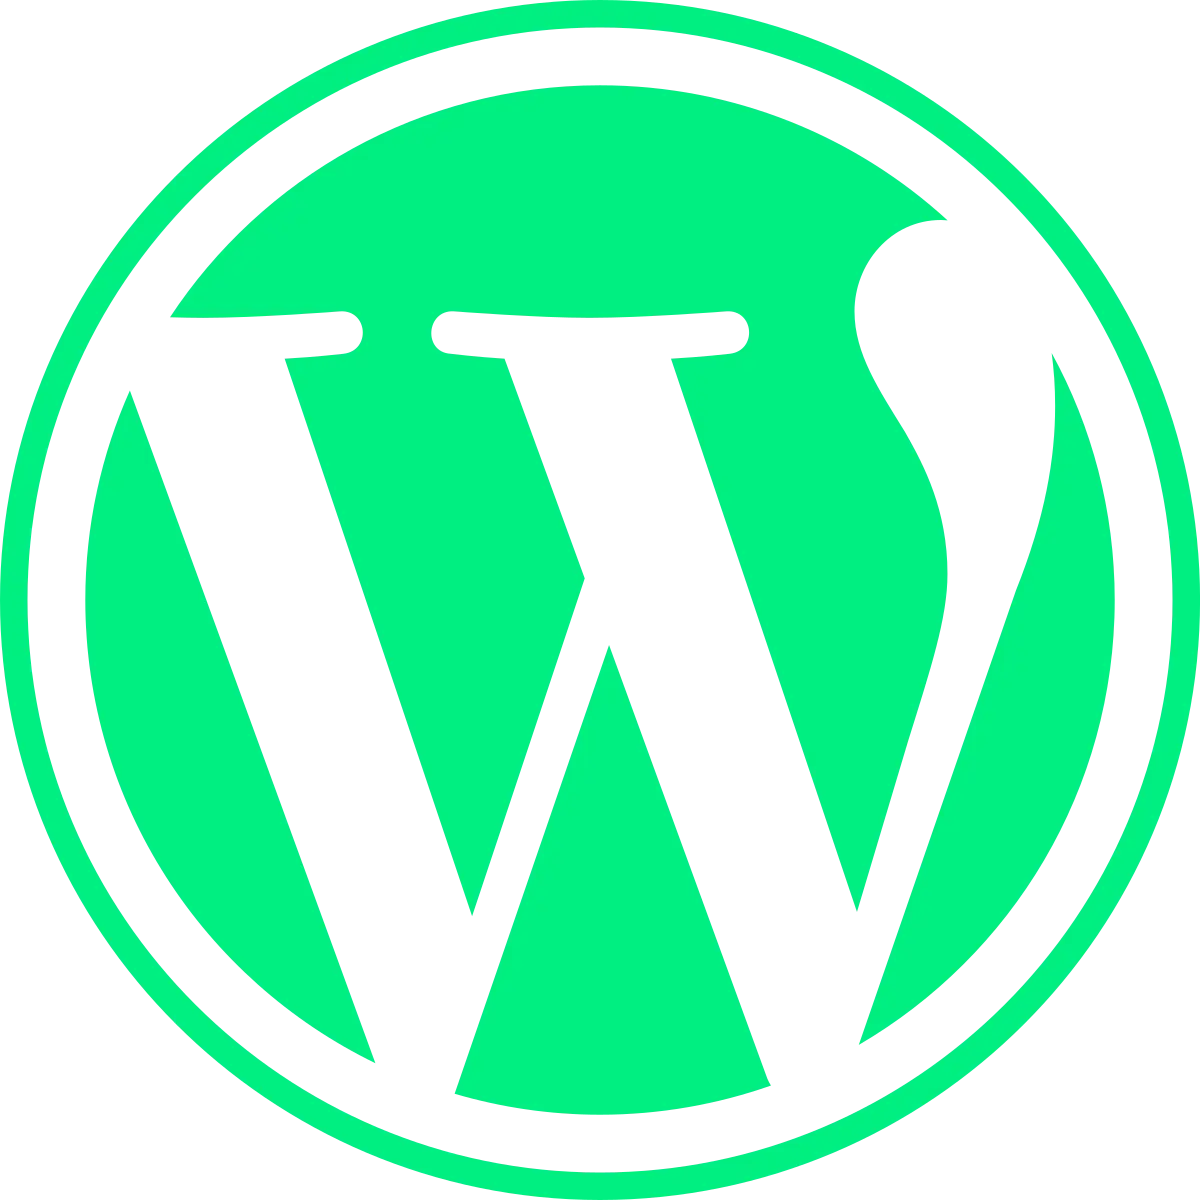 WordPress blue logo.svg